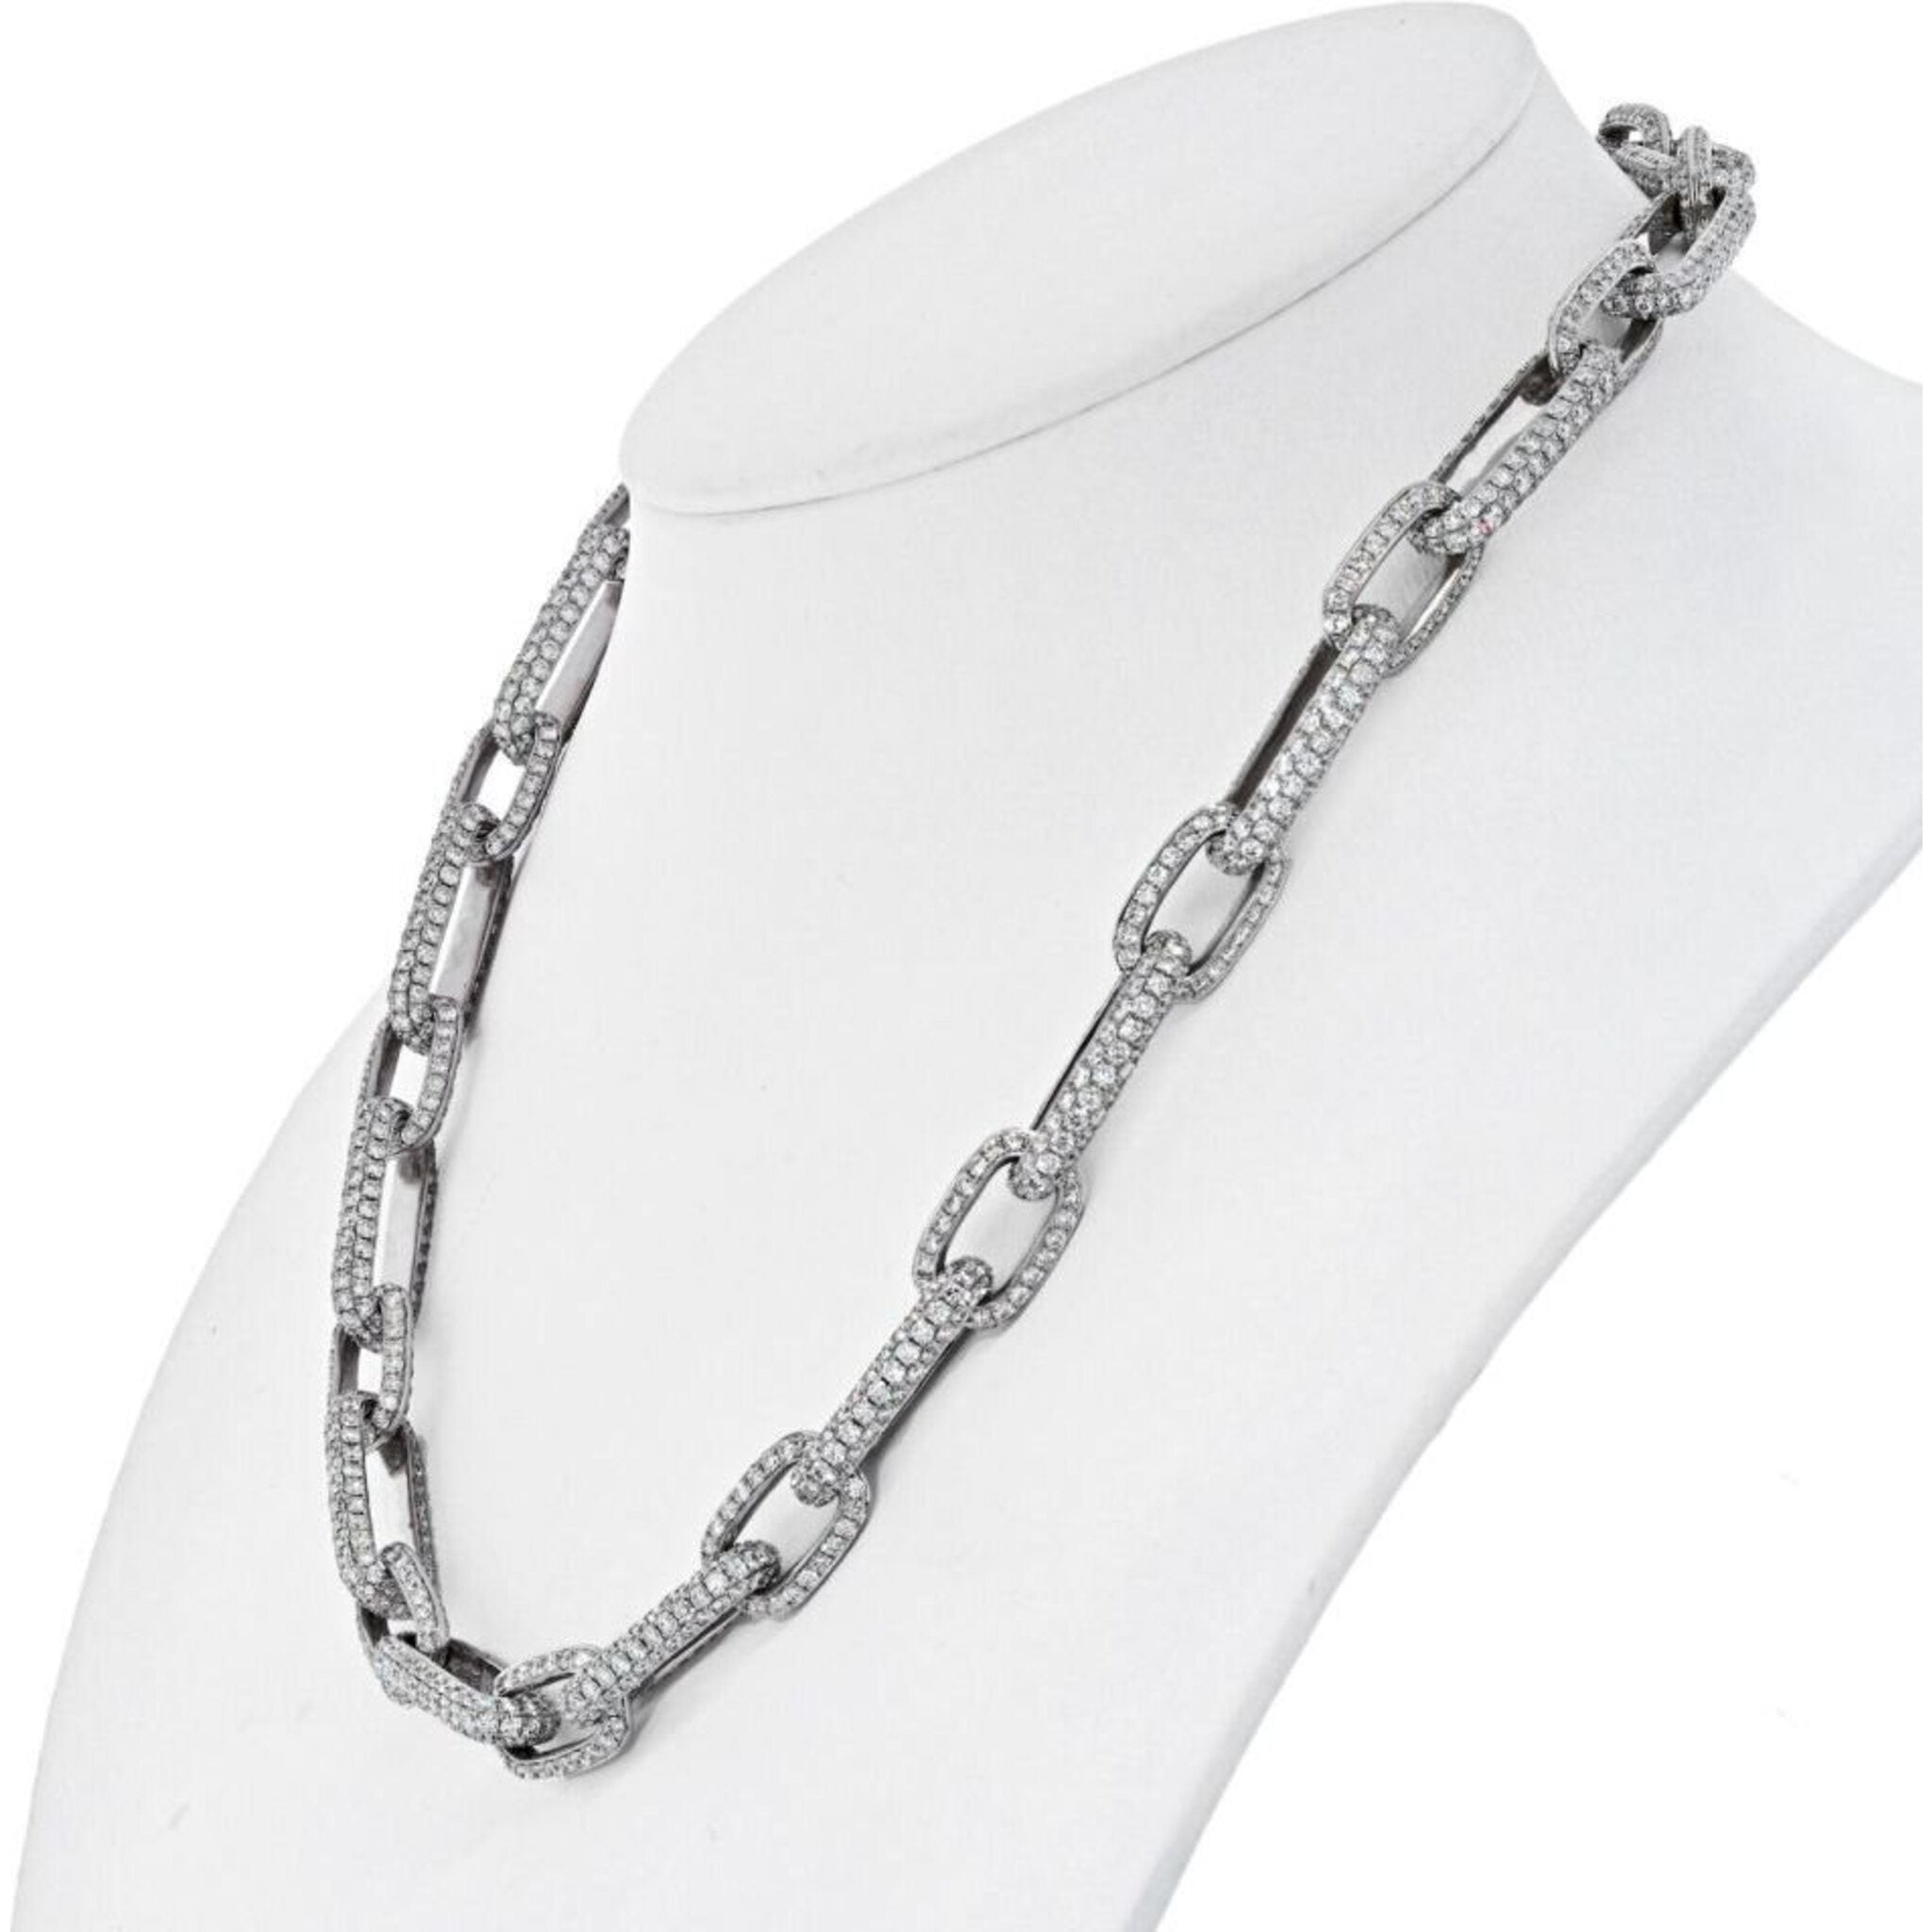 18K White Gold 41 Carat Pave Diamond Link Chain Necklace